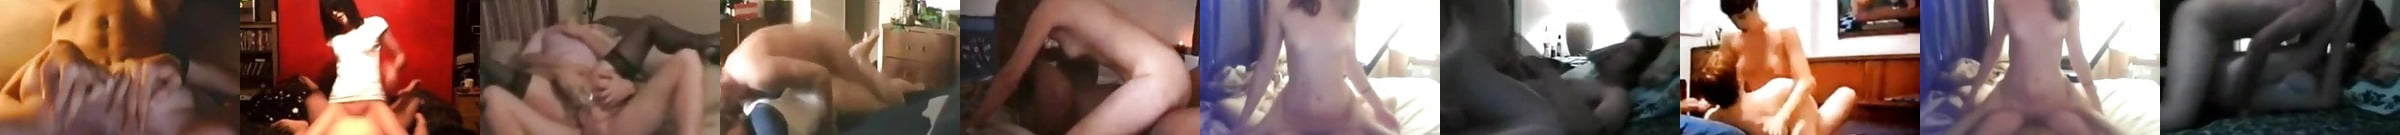 Free Orgasm Compilation Porn Videos Xhamster